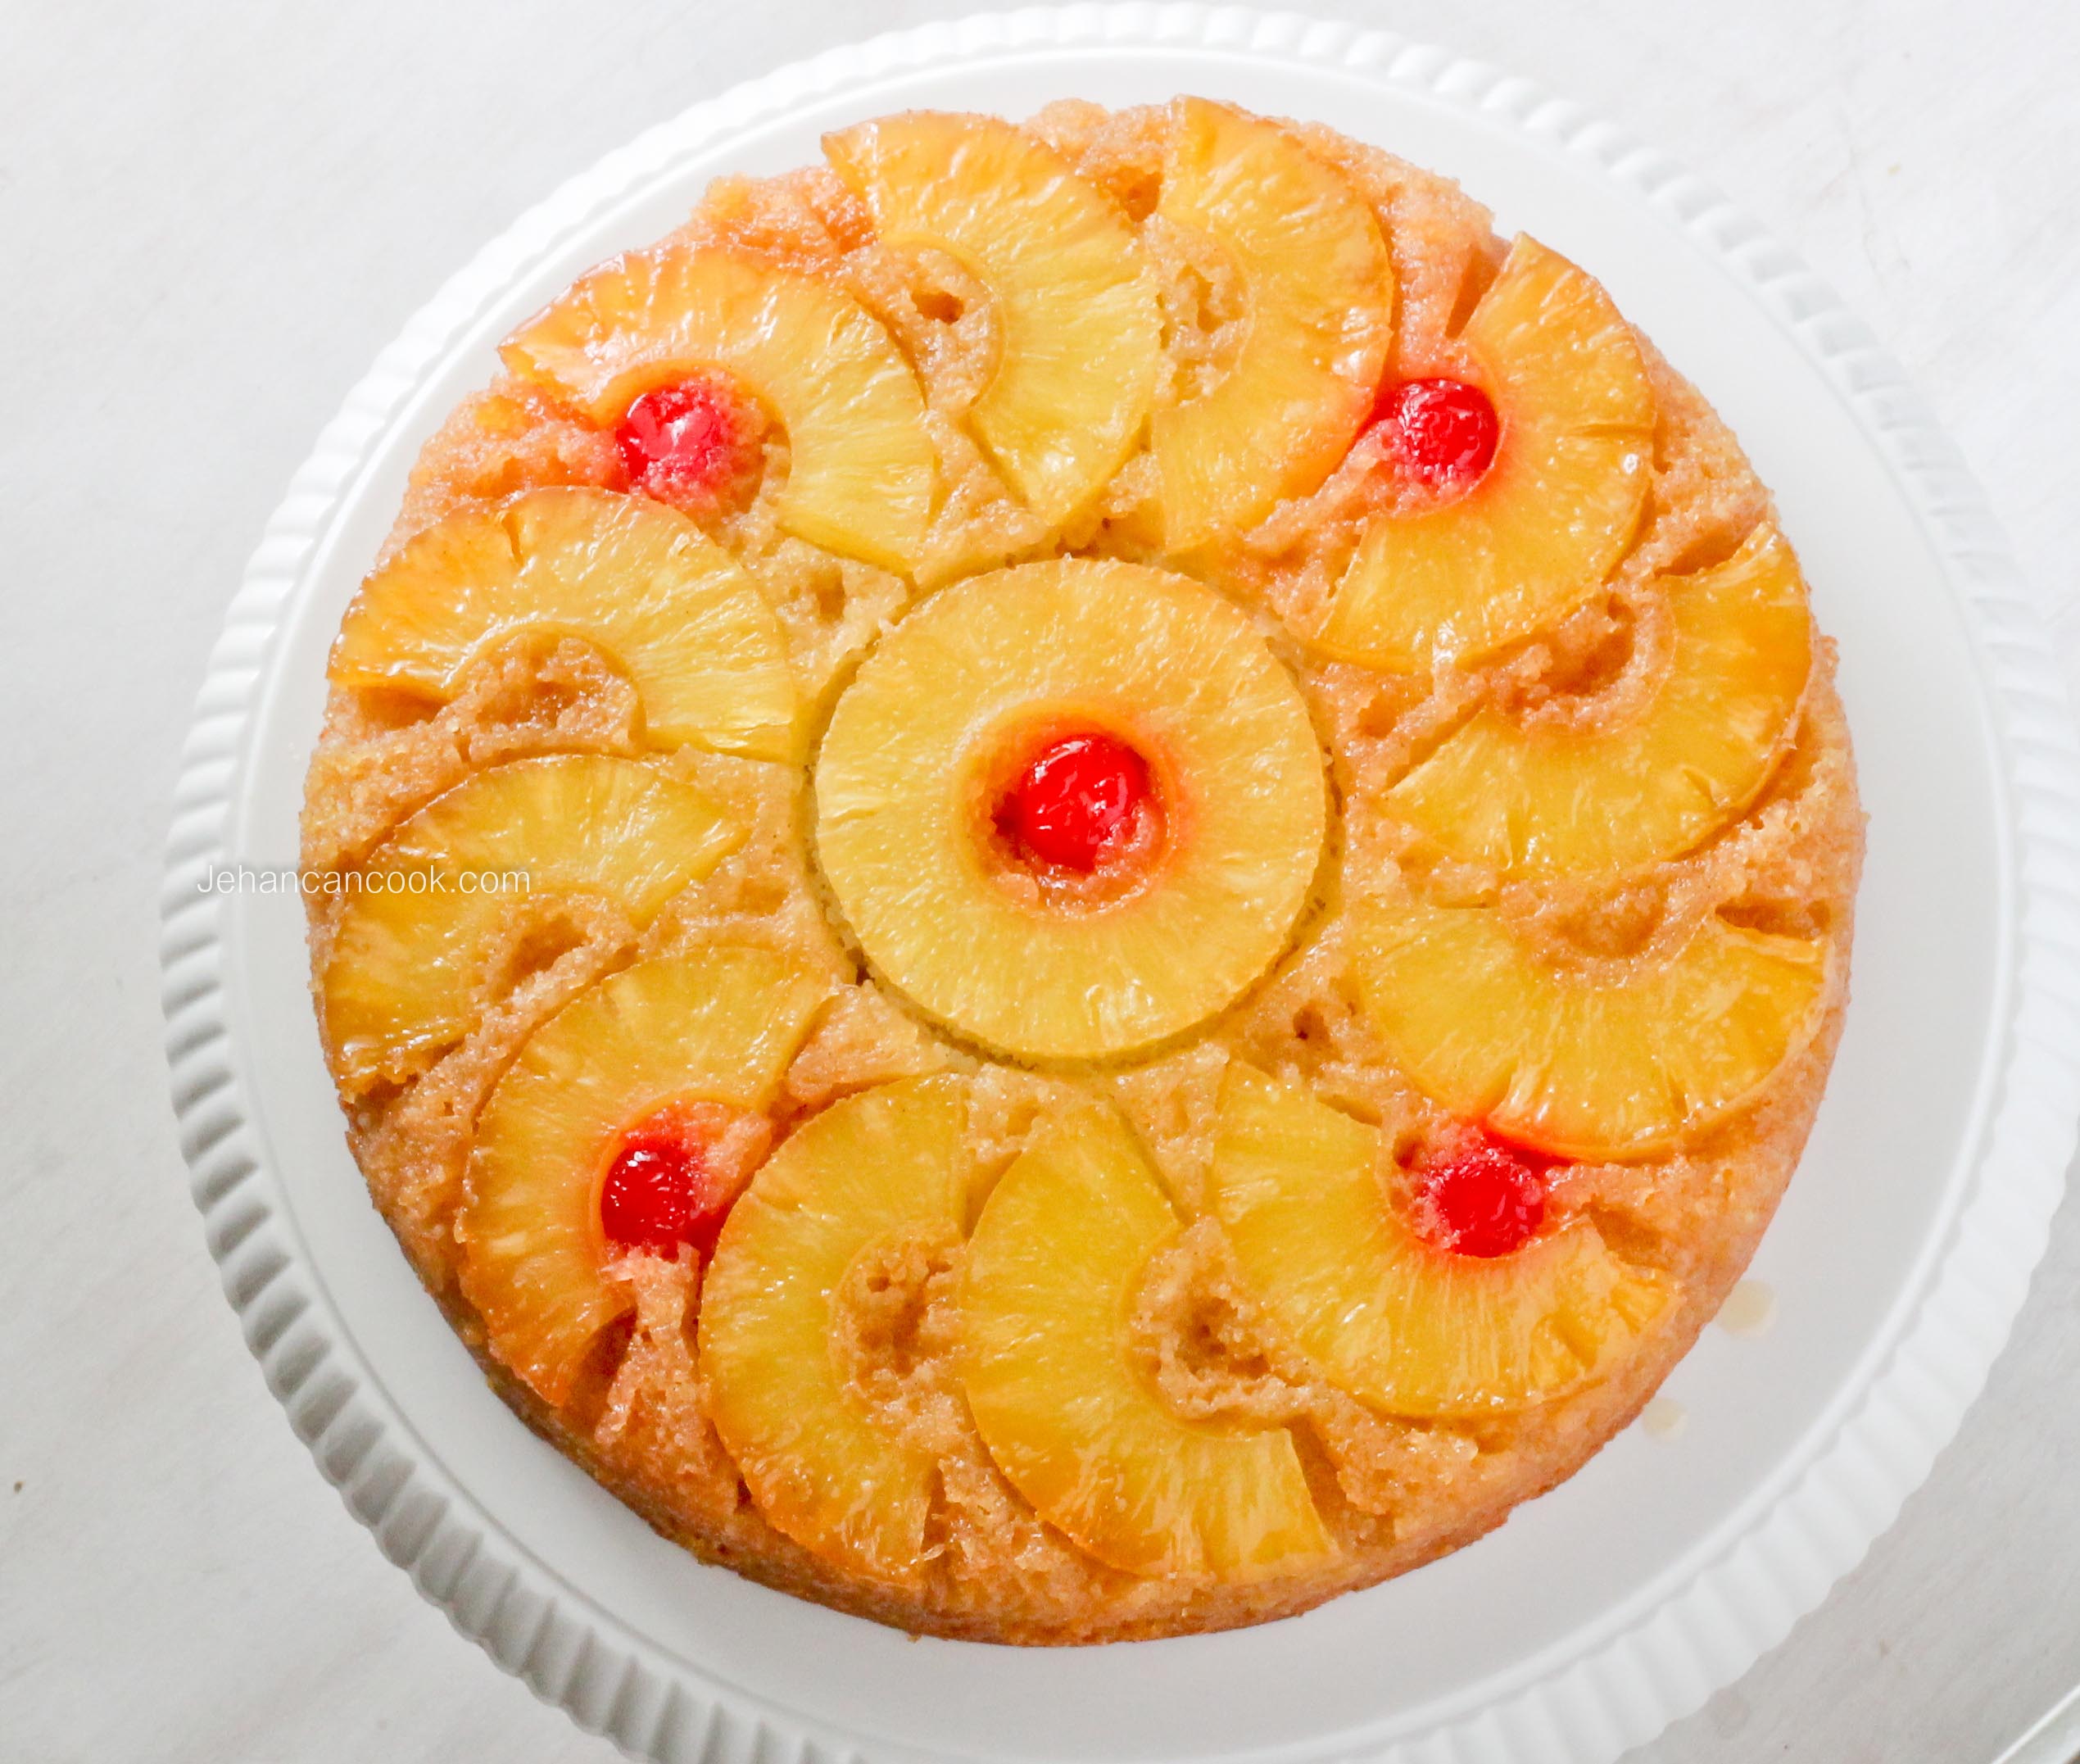 https://jehancancook.com/wp-content/uploads/2014/08/Pineapple-Upside-Down-Cake-1-7.jpg